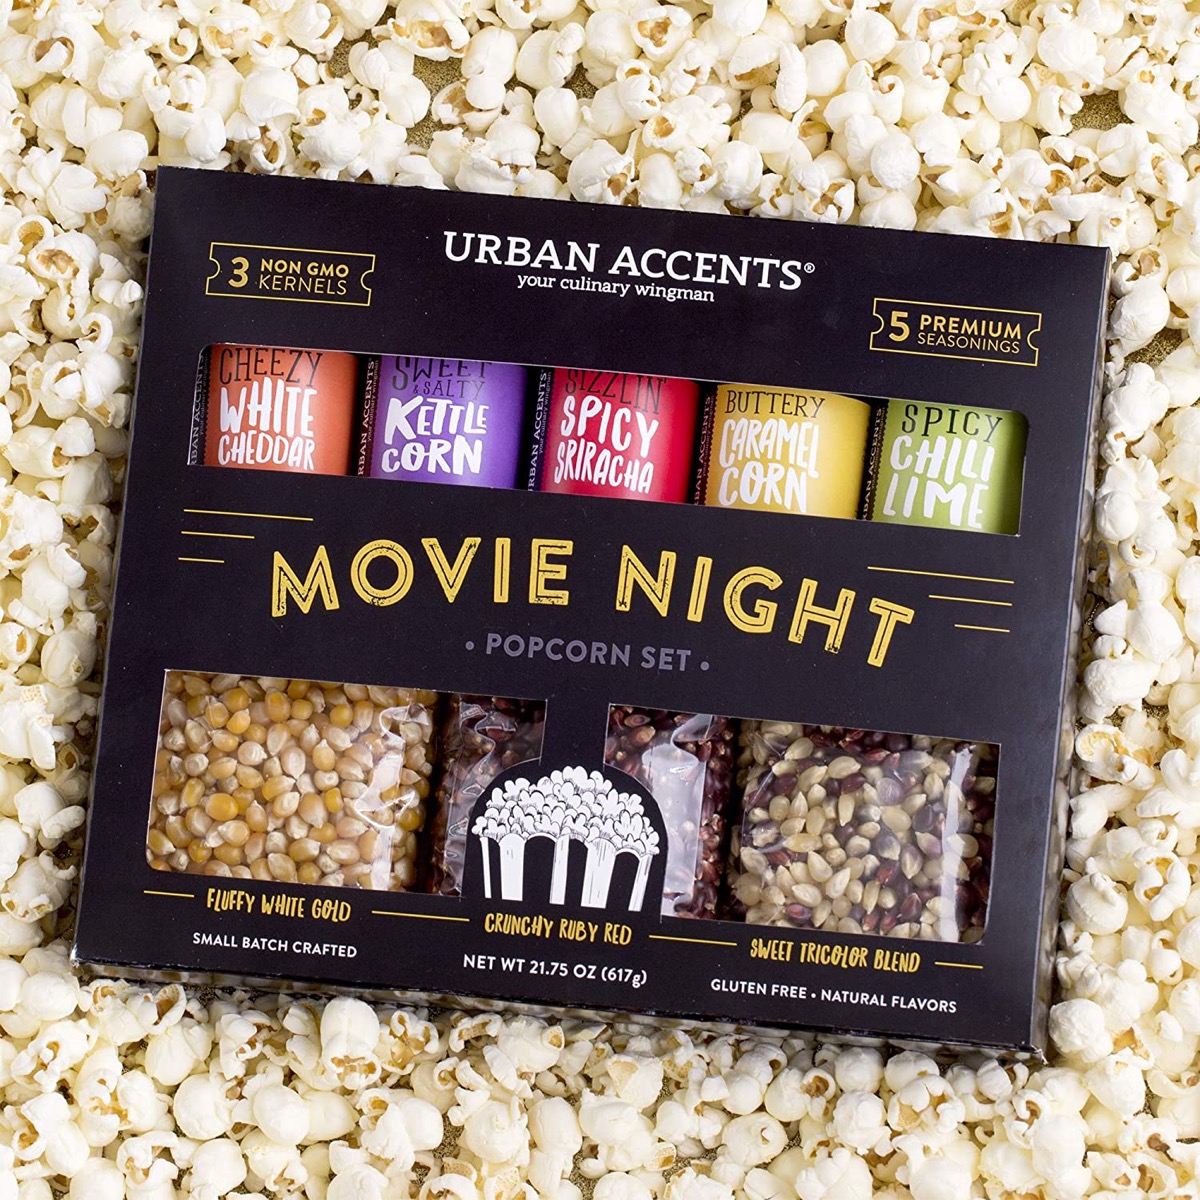 Movie night in a box